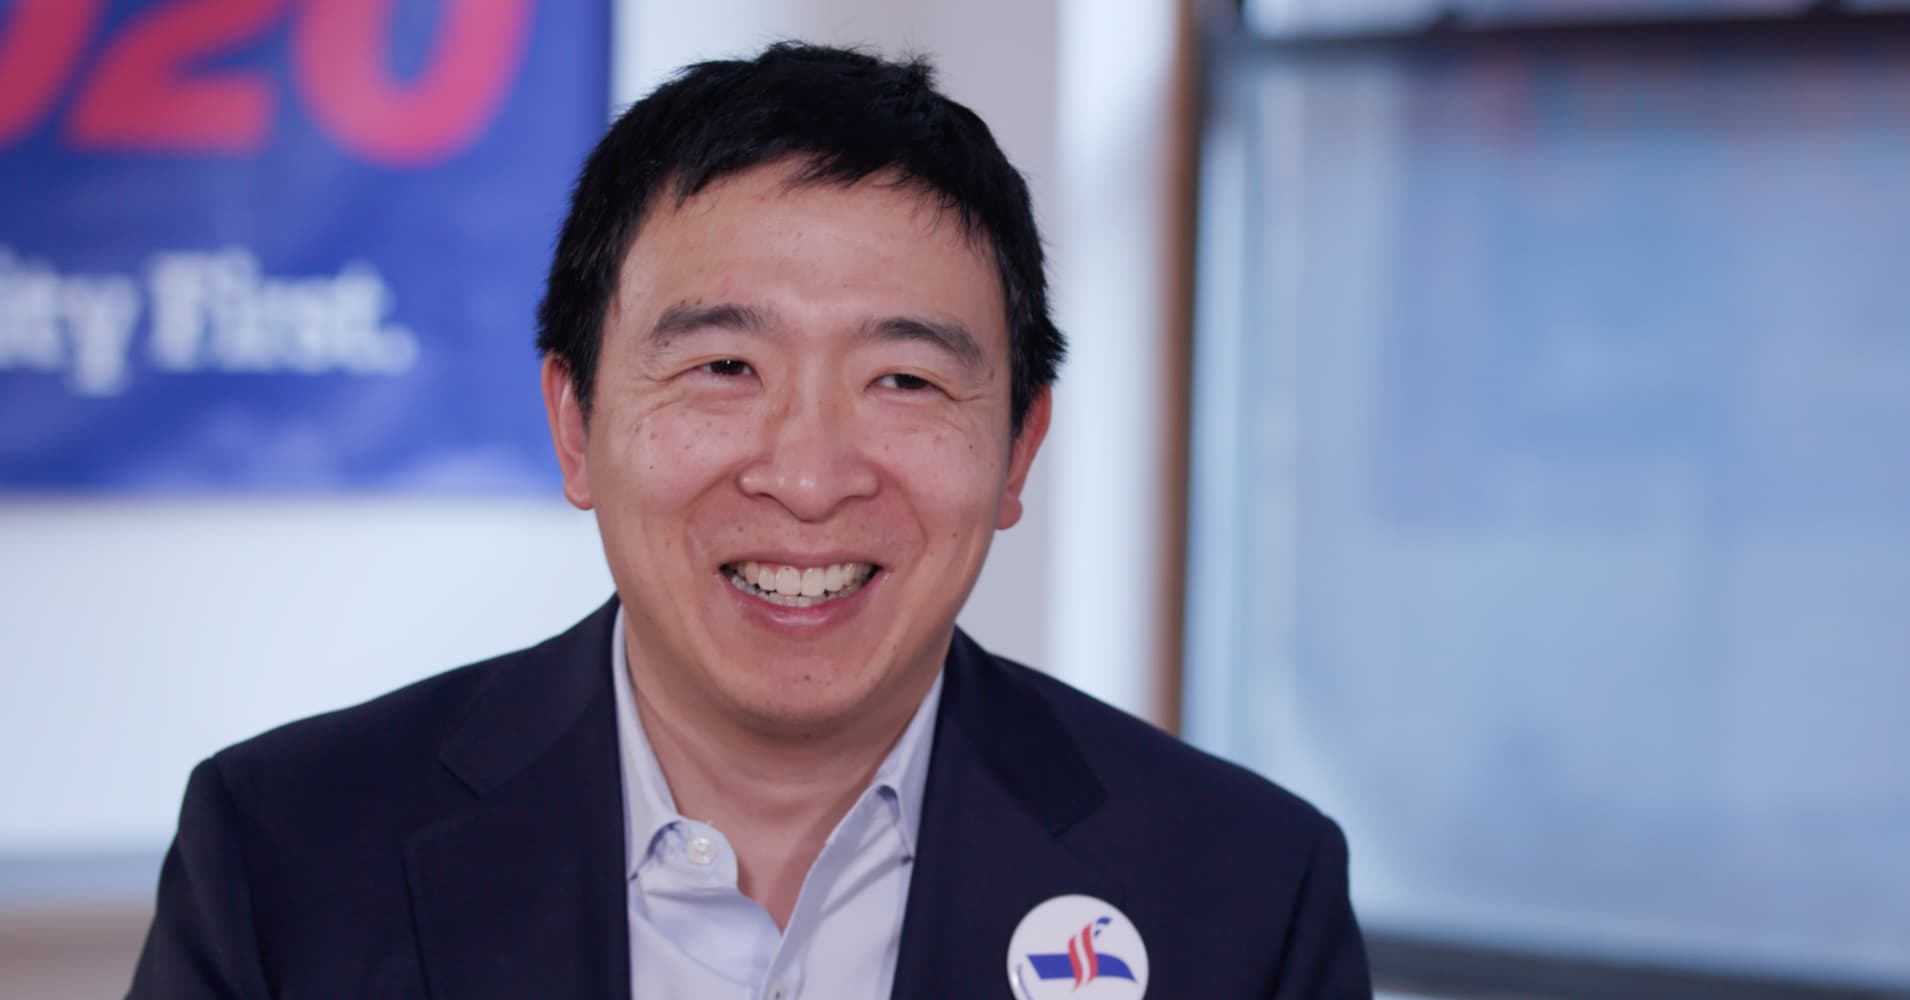 Democrat Andrew Yang running for president on platform of free cash1910 x 1000